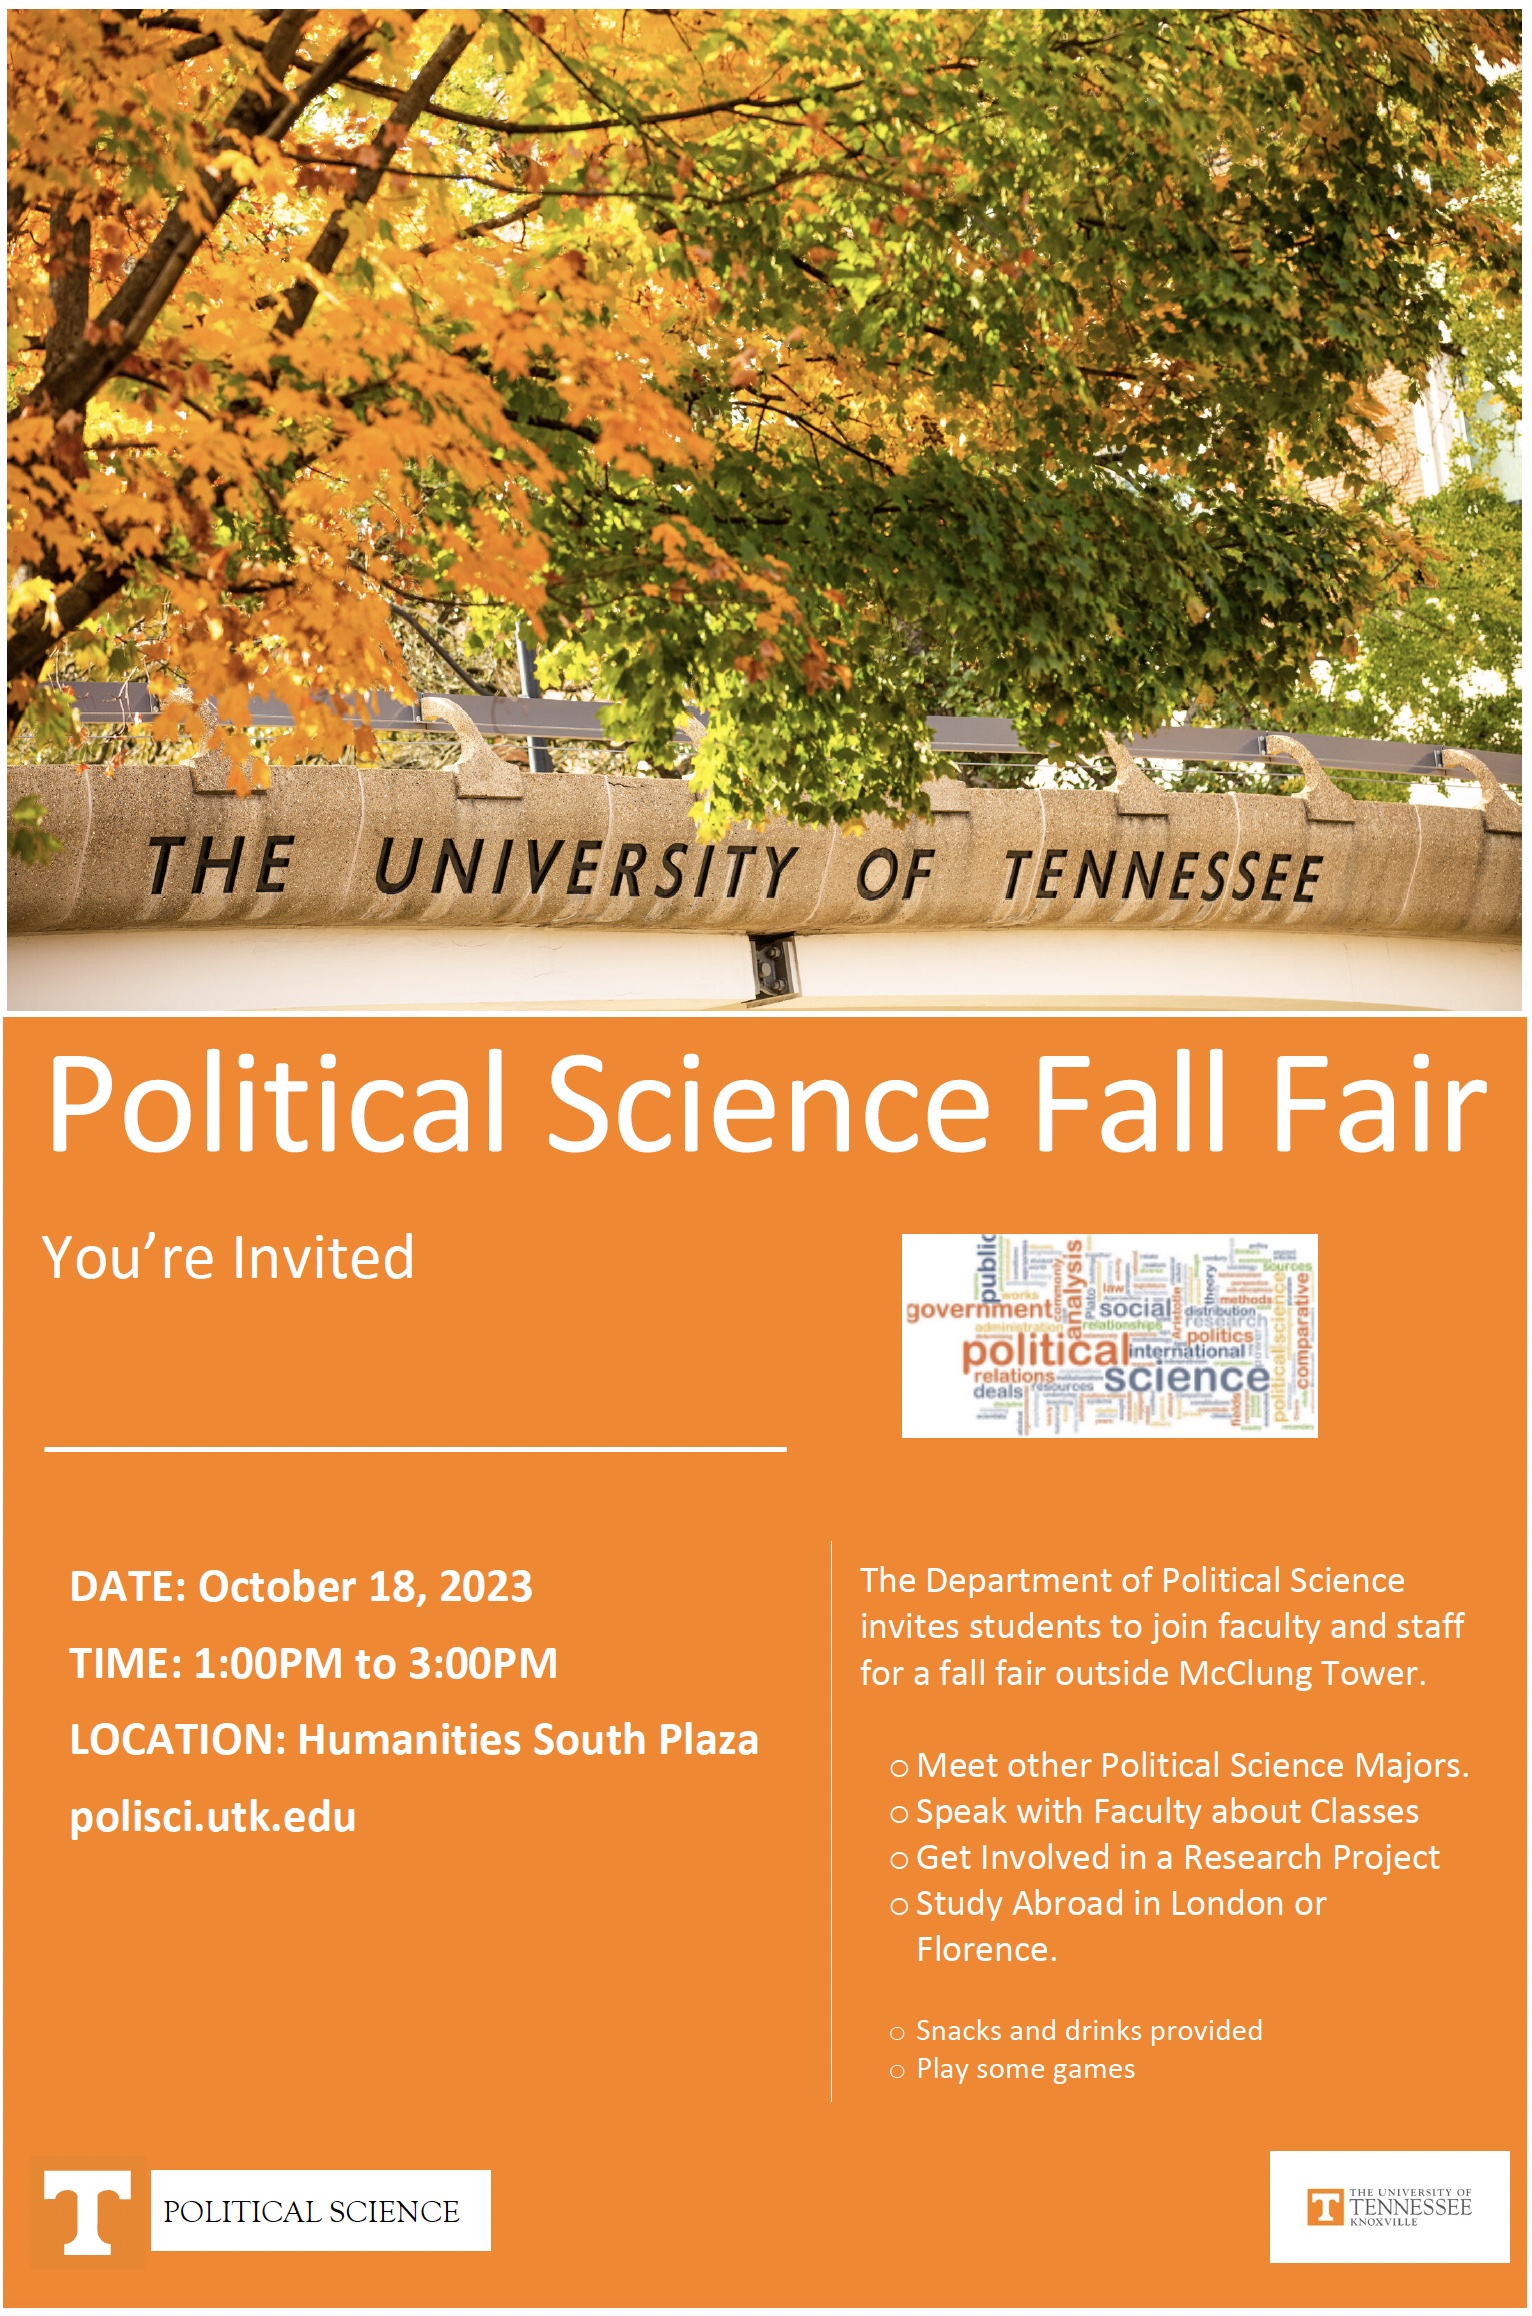 Political Science fall fair flier